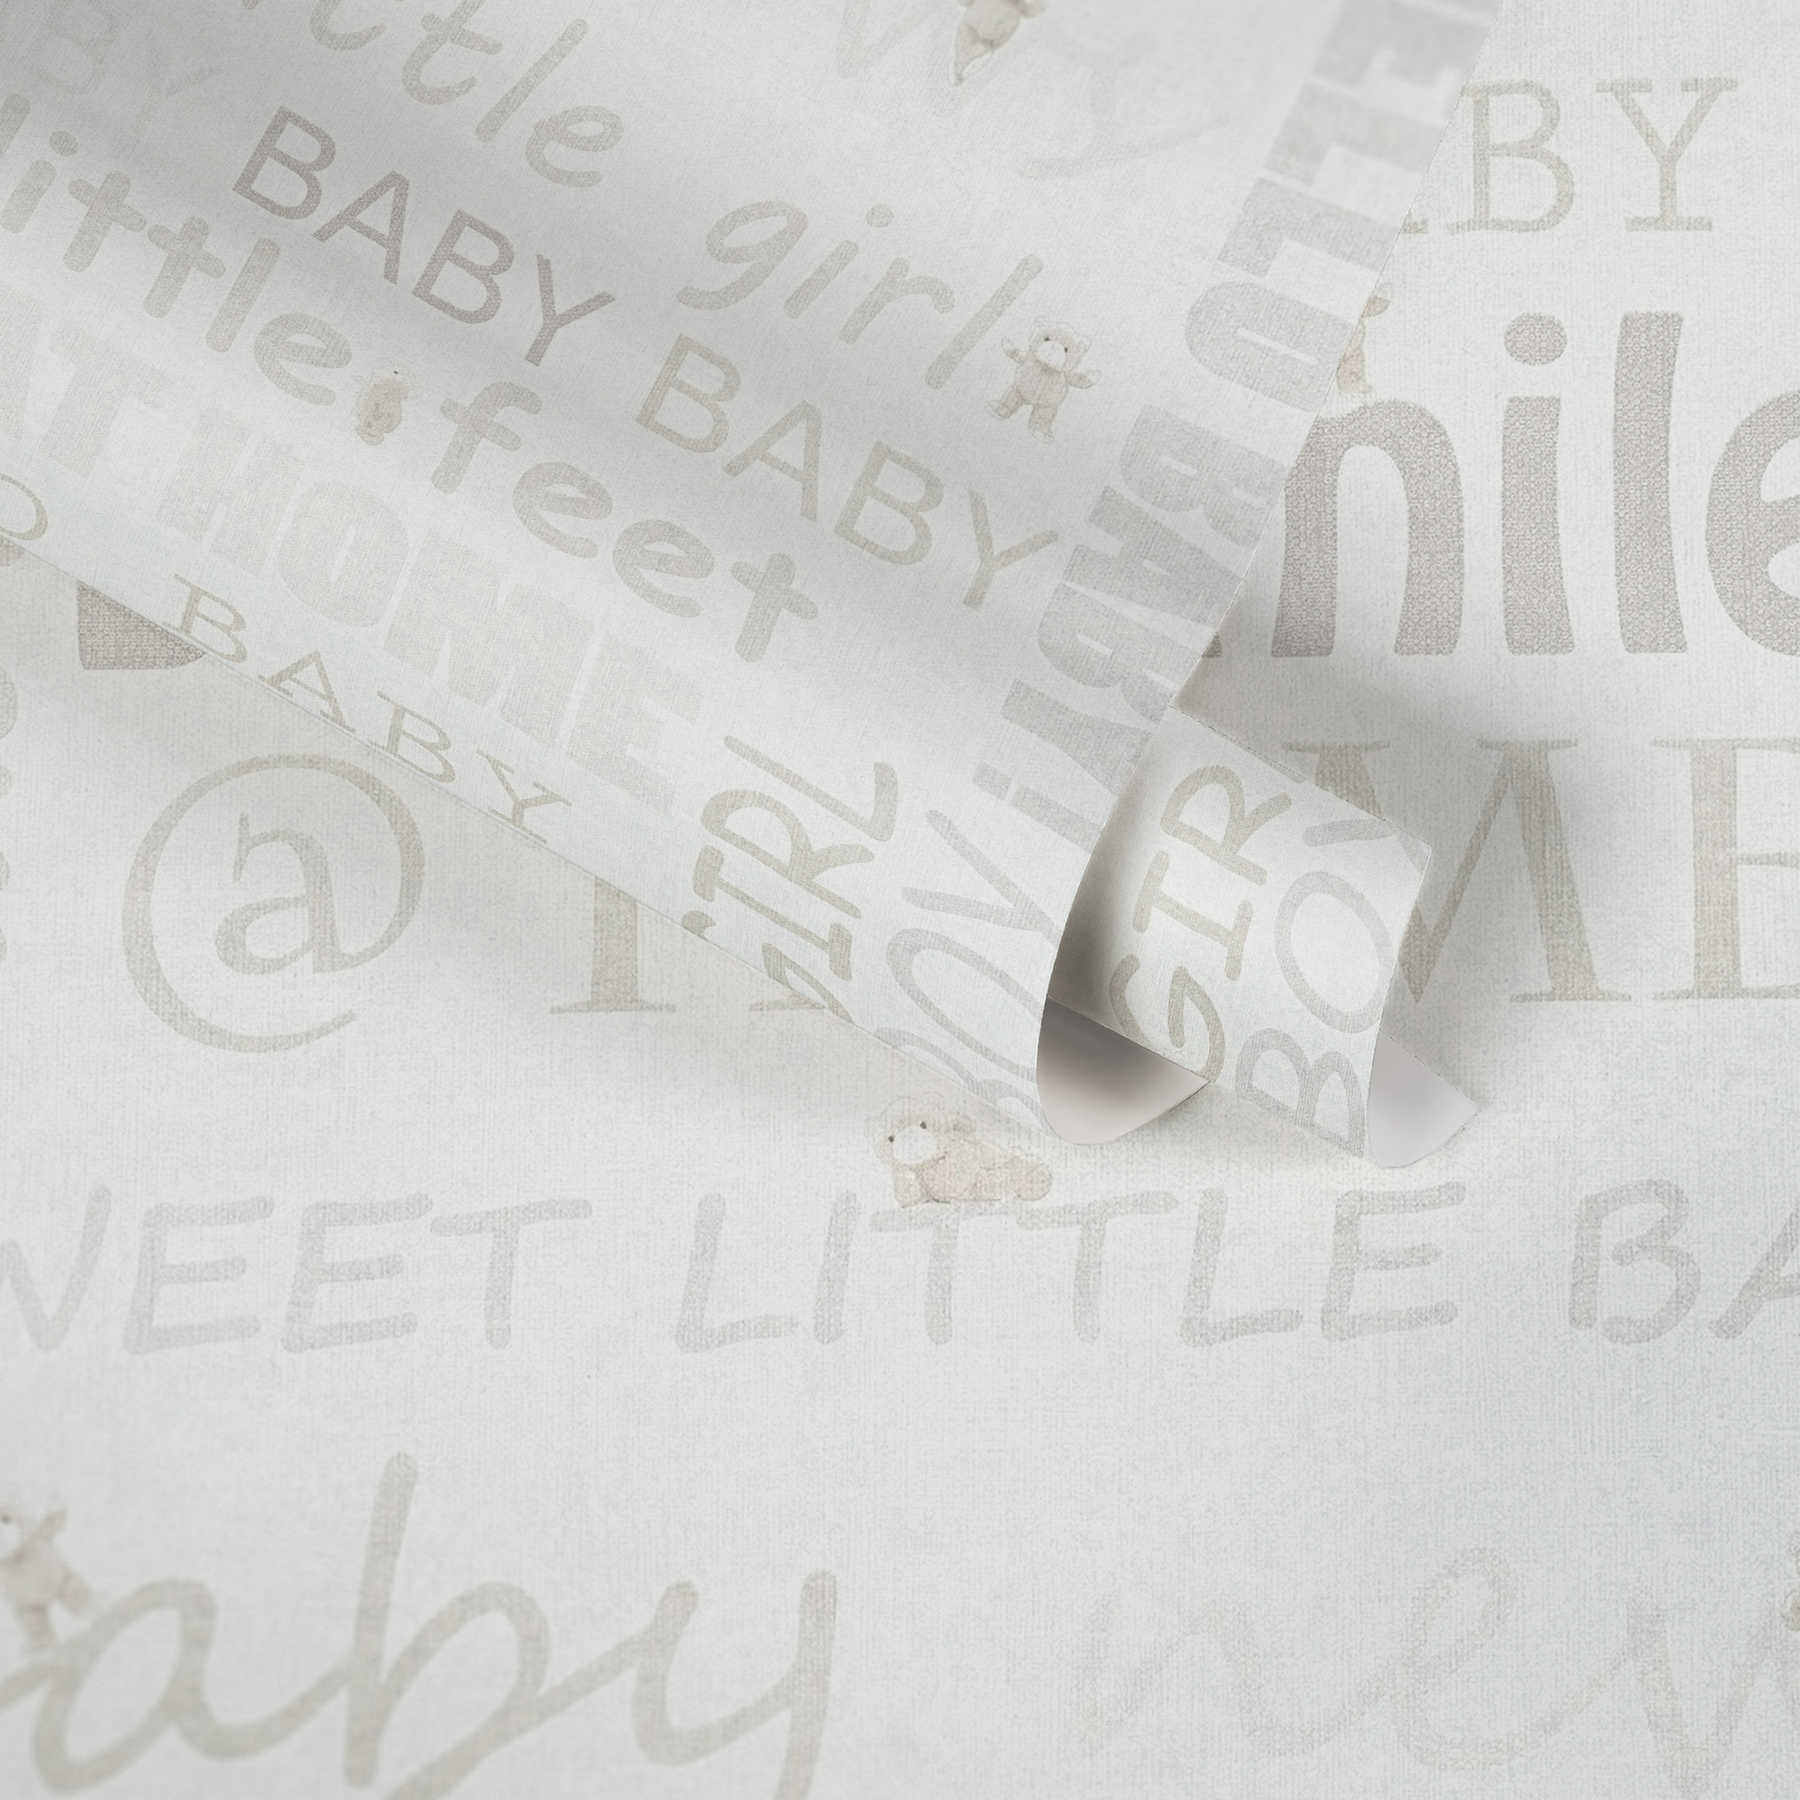             Papel pintado para habitación de bebé neutro con motivo de escritura - metálico, blanco
        